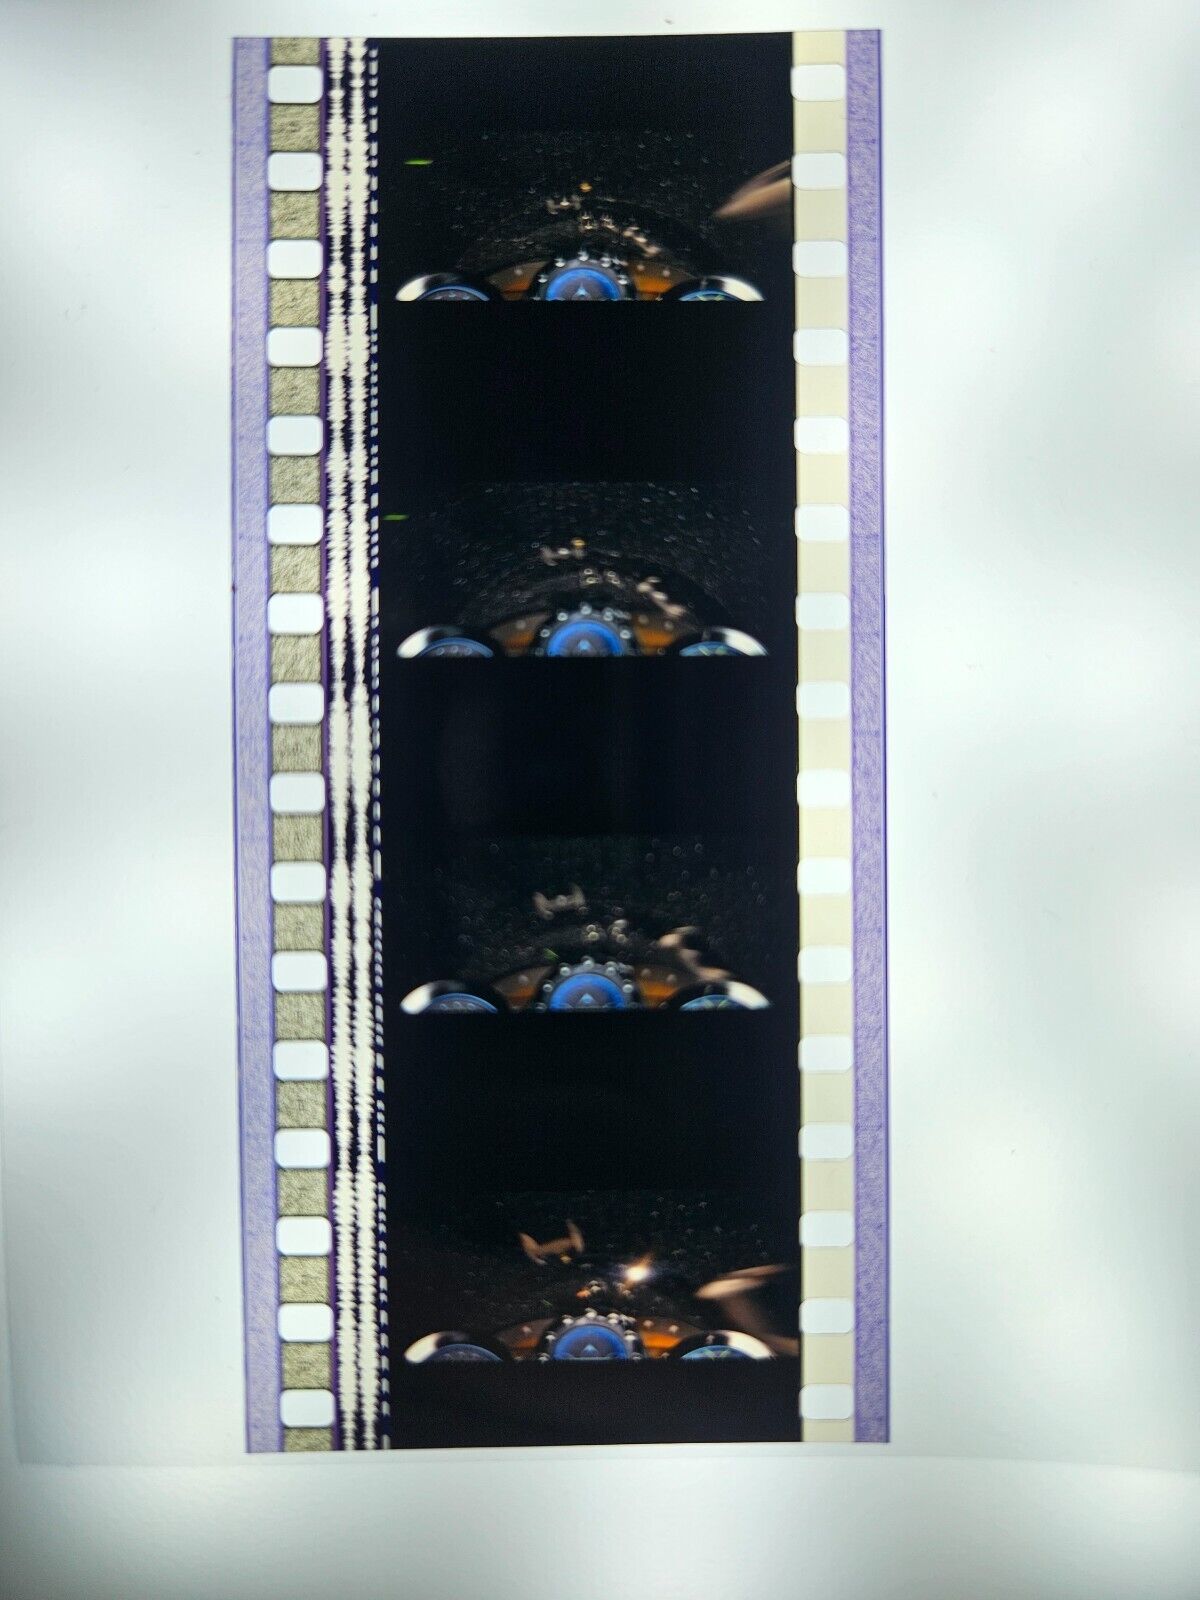 Space Battle Star Wars Episode 1 Phantom Menace 35mm Original Film Cells SW2087 Star Wars 35mm Film Cell - Hobby Gems